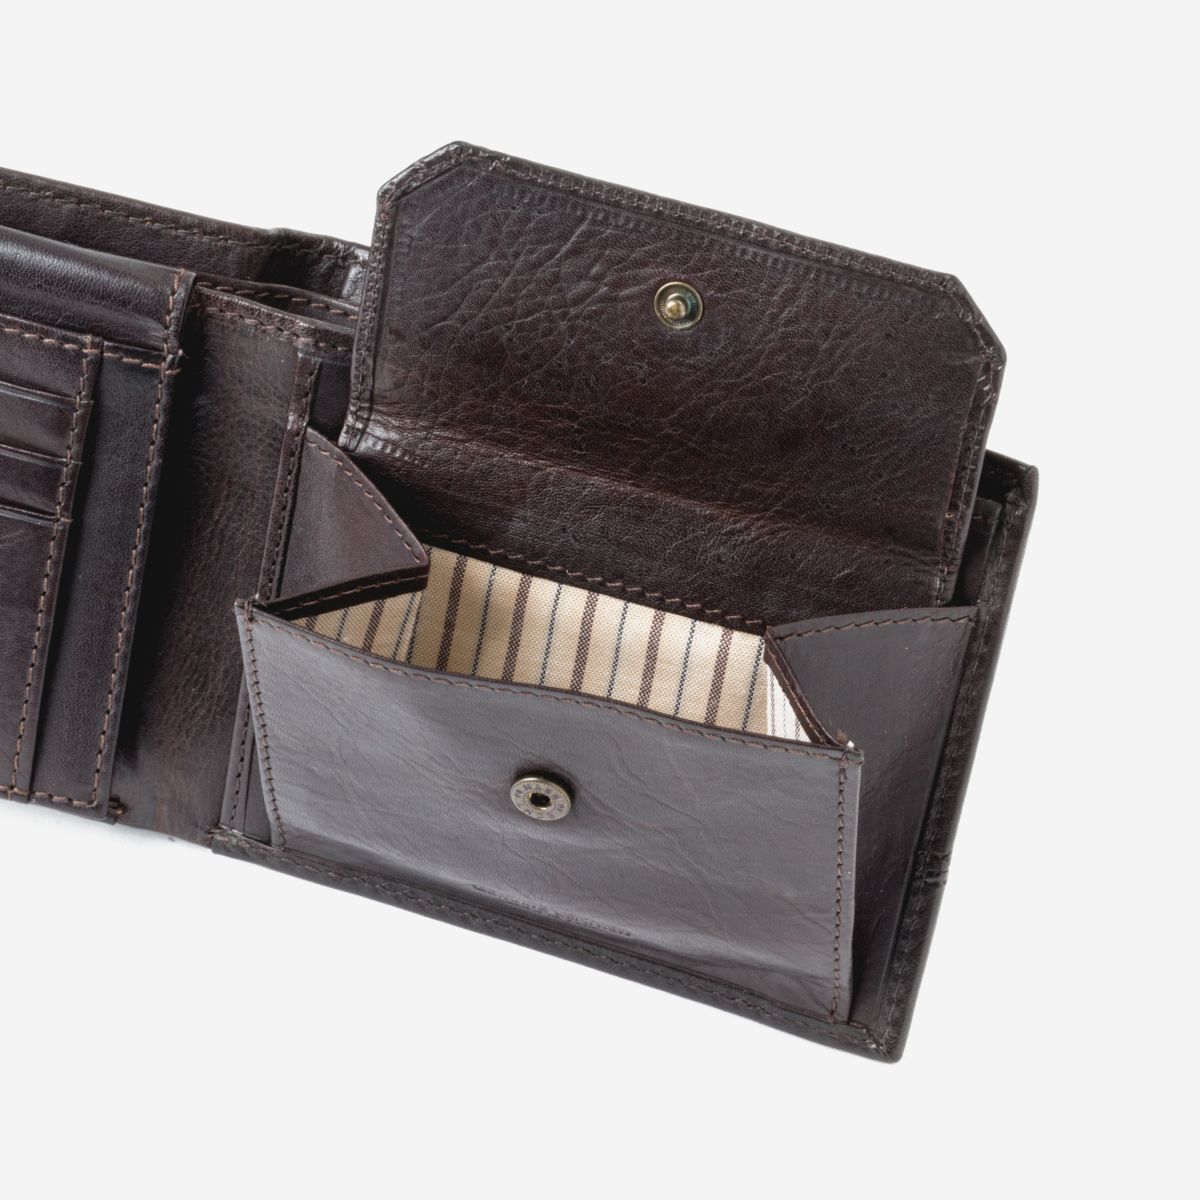 DuDu Leather Wallet With Coin Pocket For Men - Dark Brown